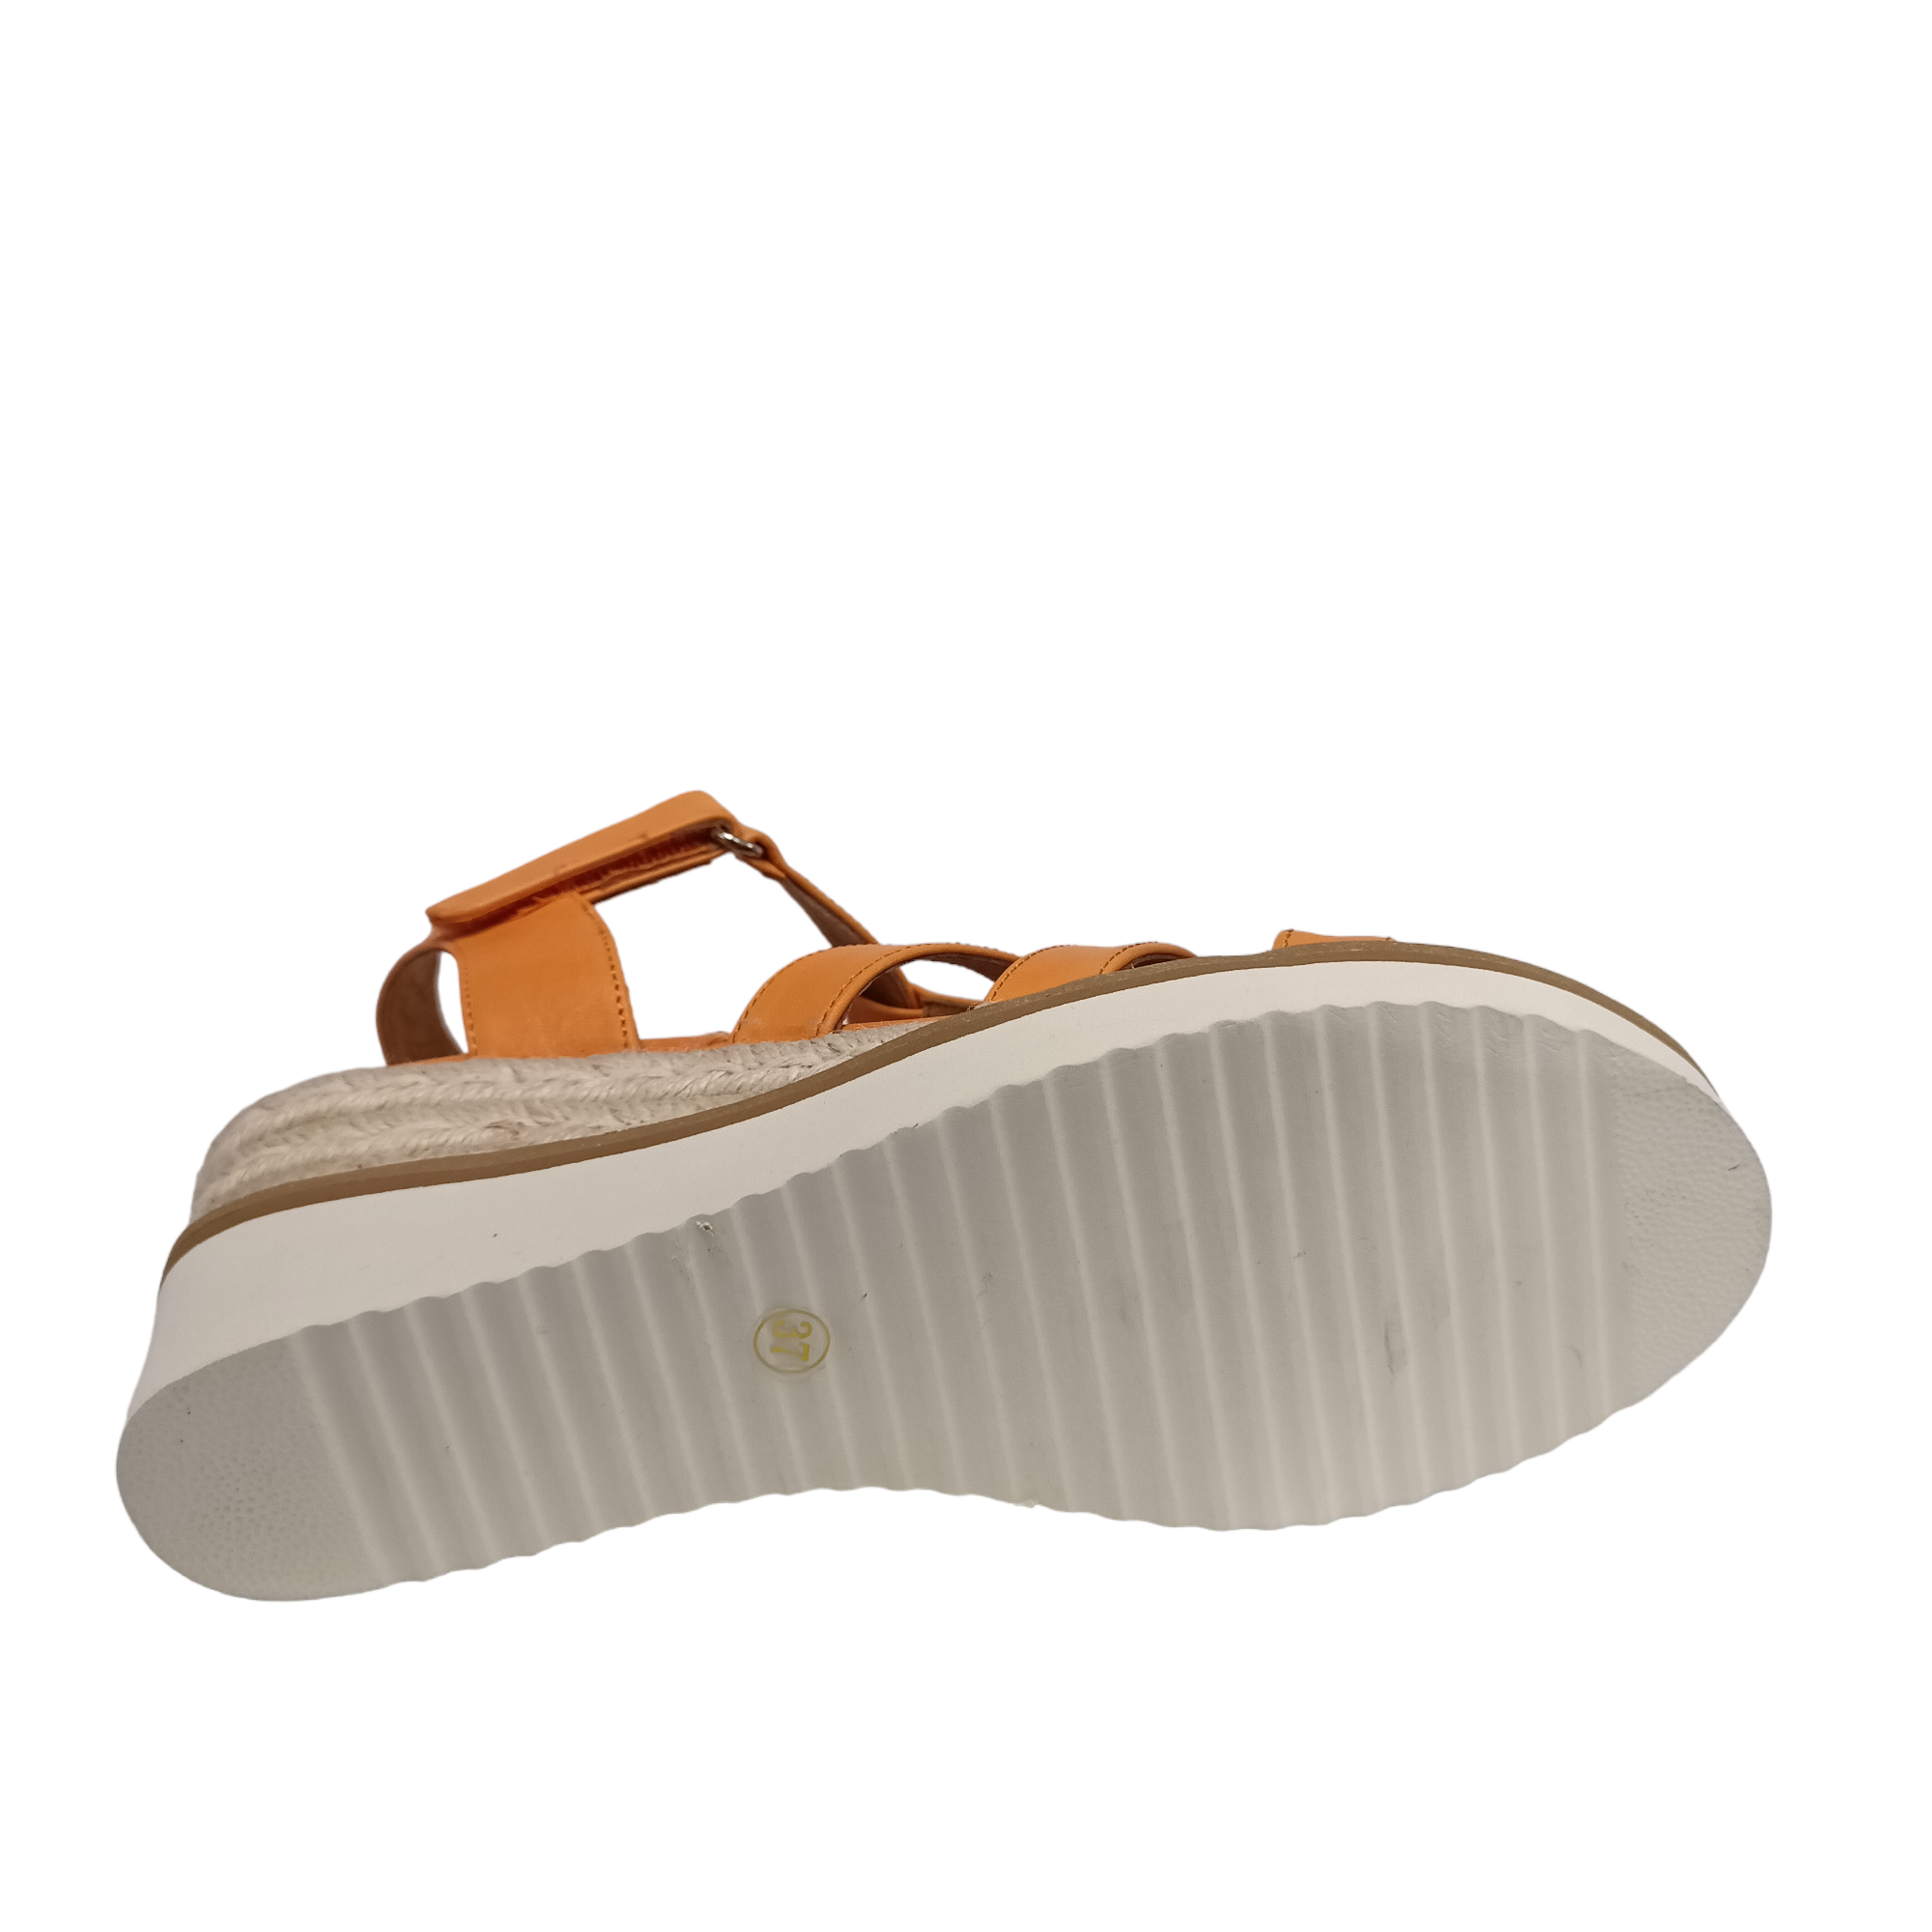 Lana - shoe&amp;me - EOS - Sandal - Sandals, Summer, Wedges, Womens